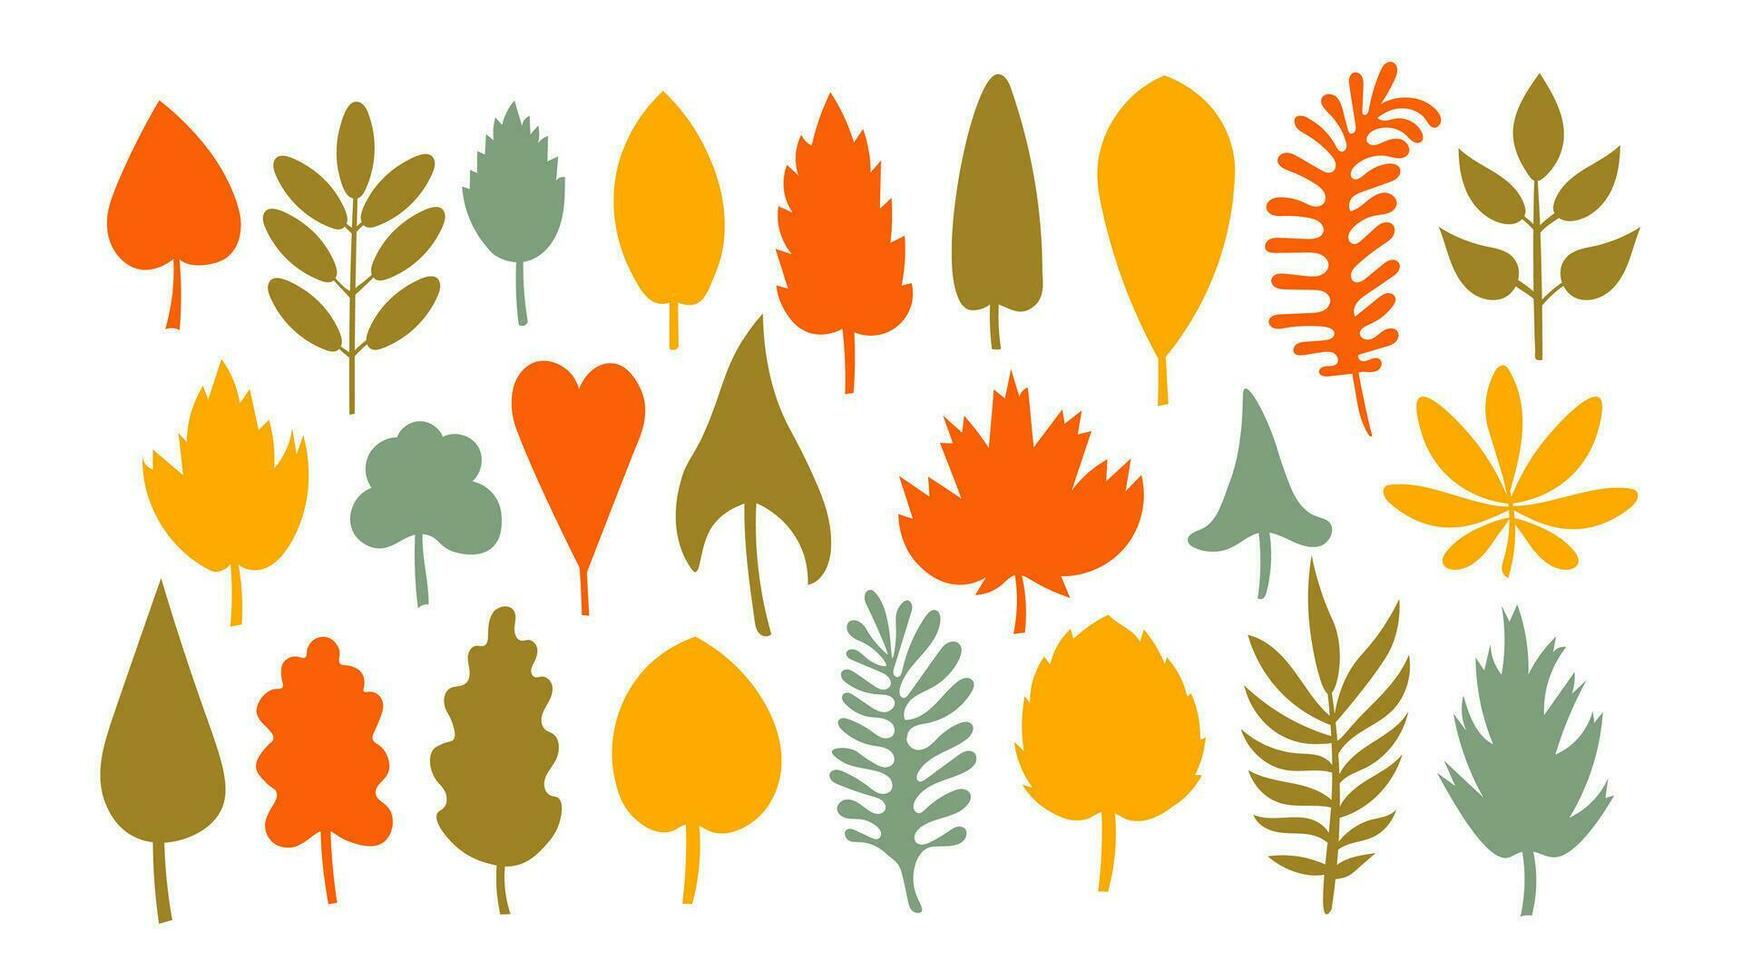 Autumn leaves shape vector set